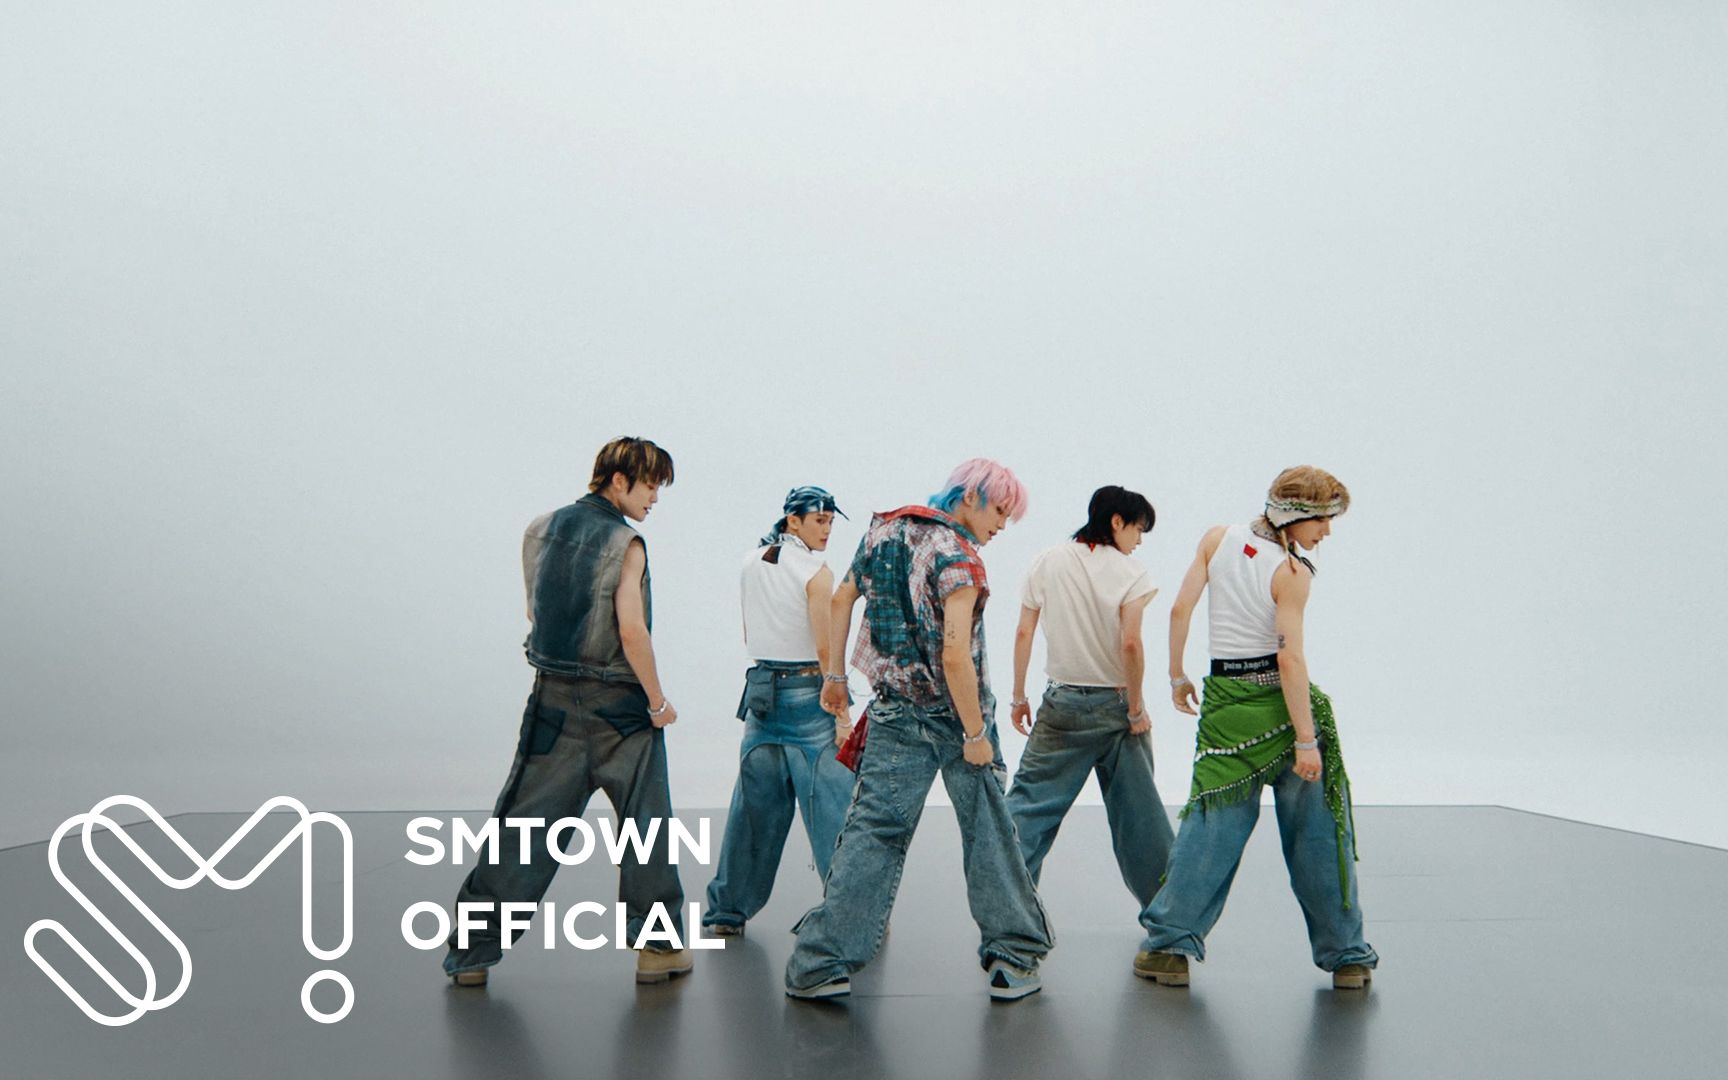 NCT U《Baggy Jeans》MV